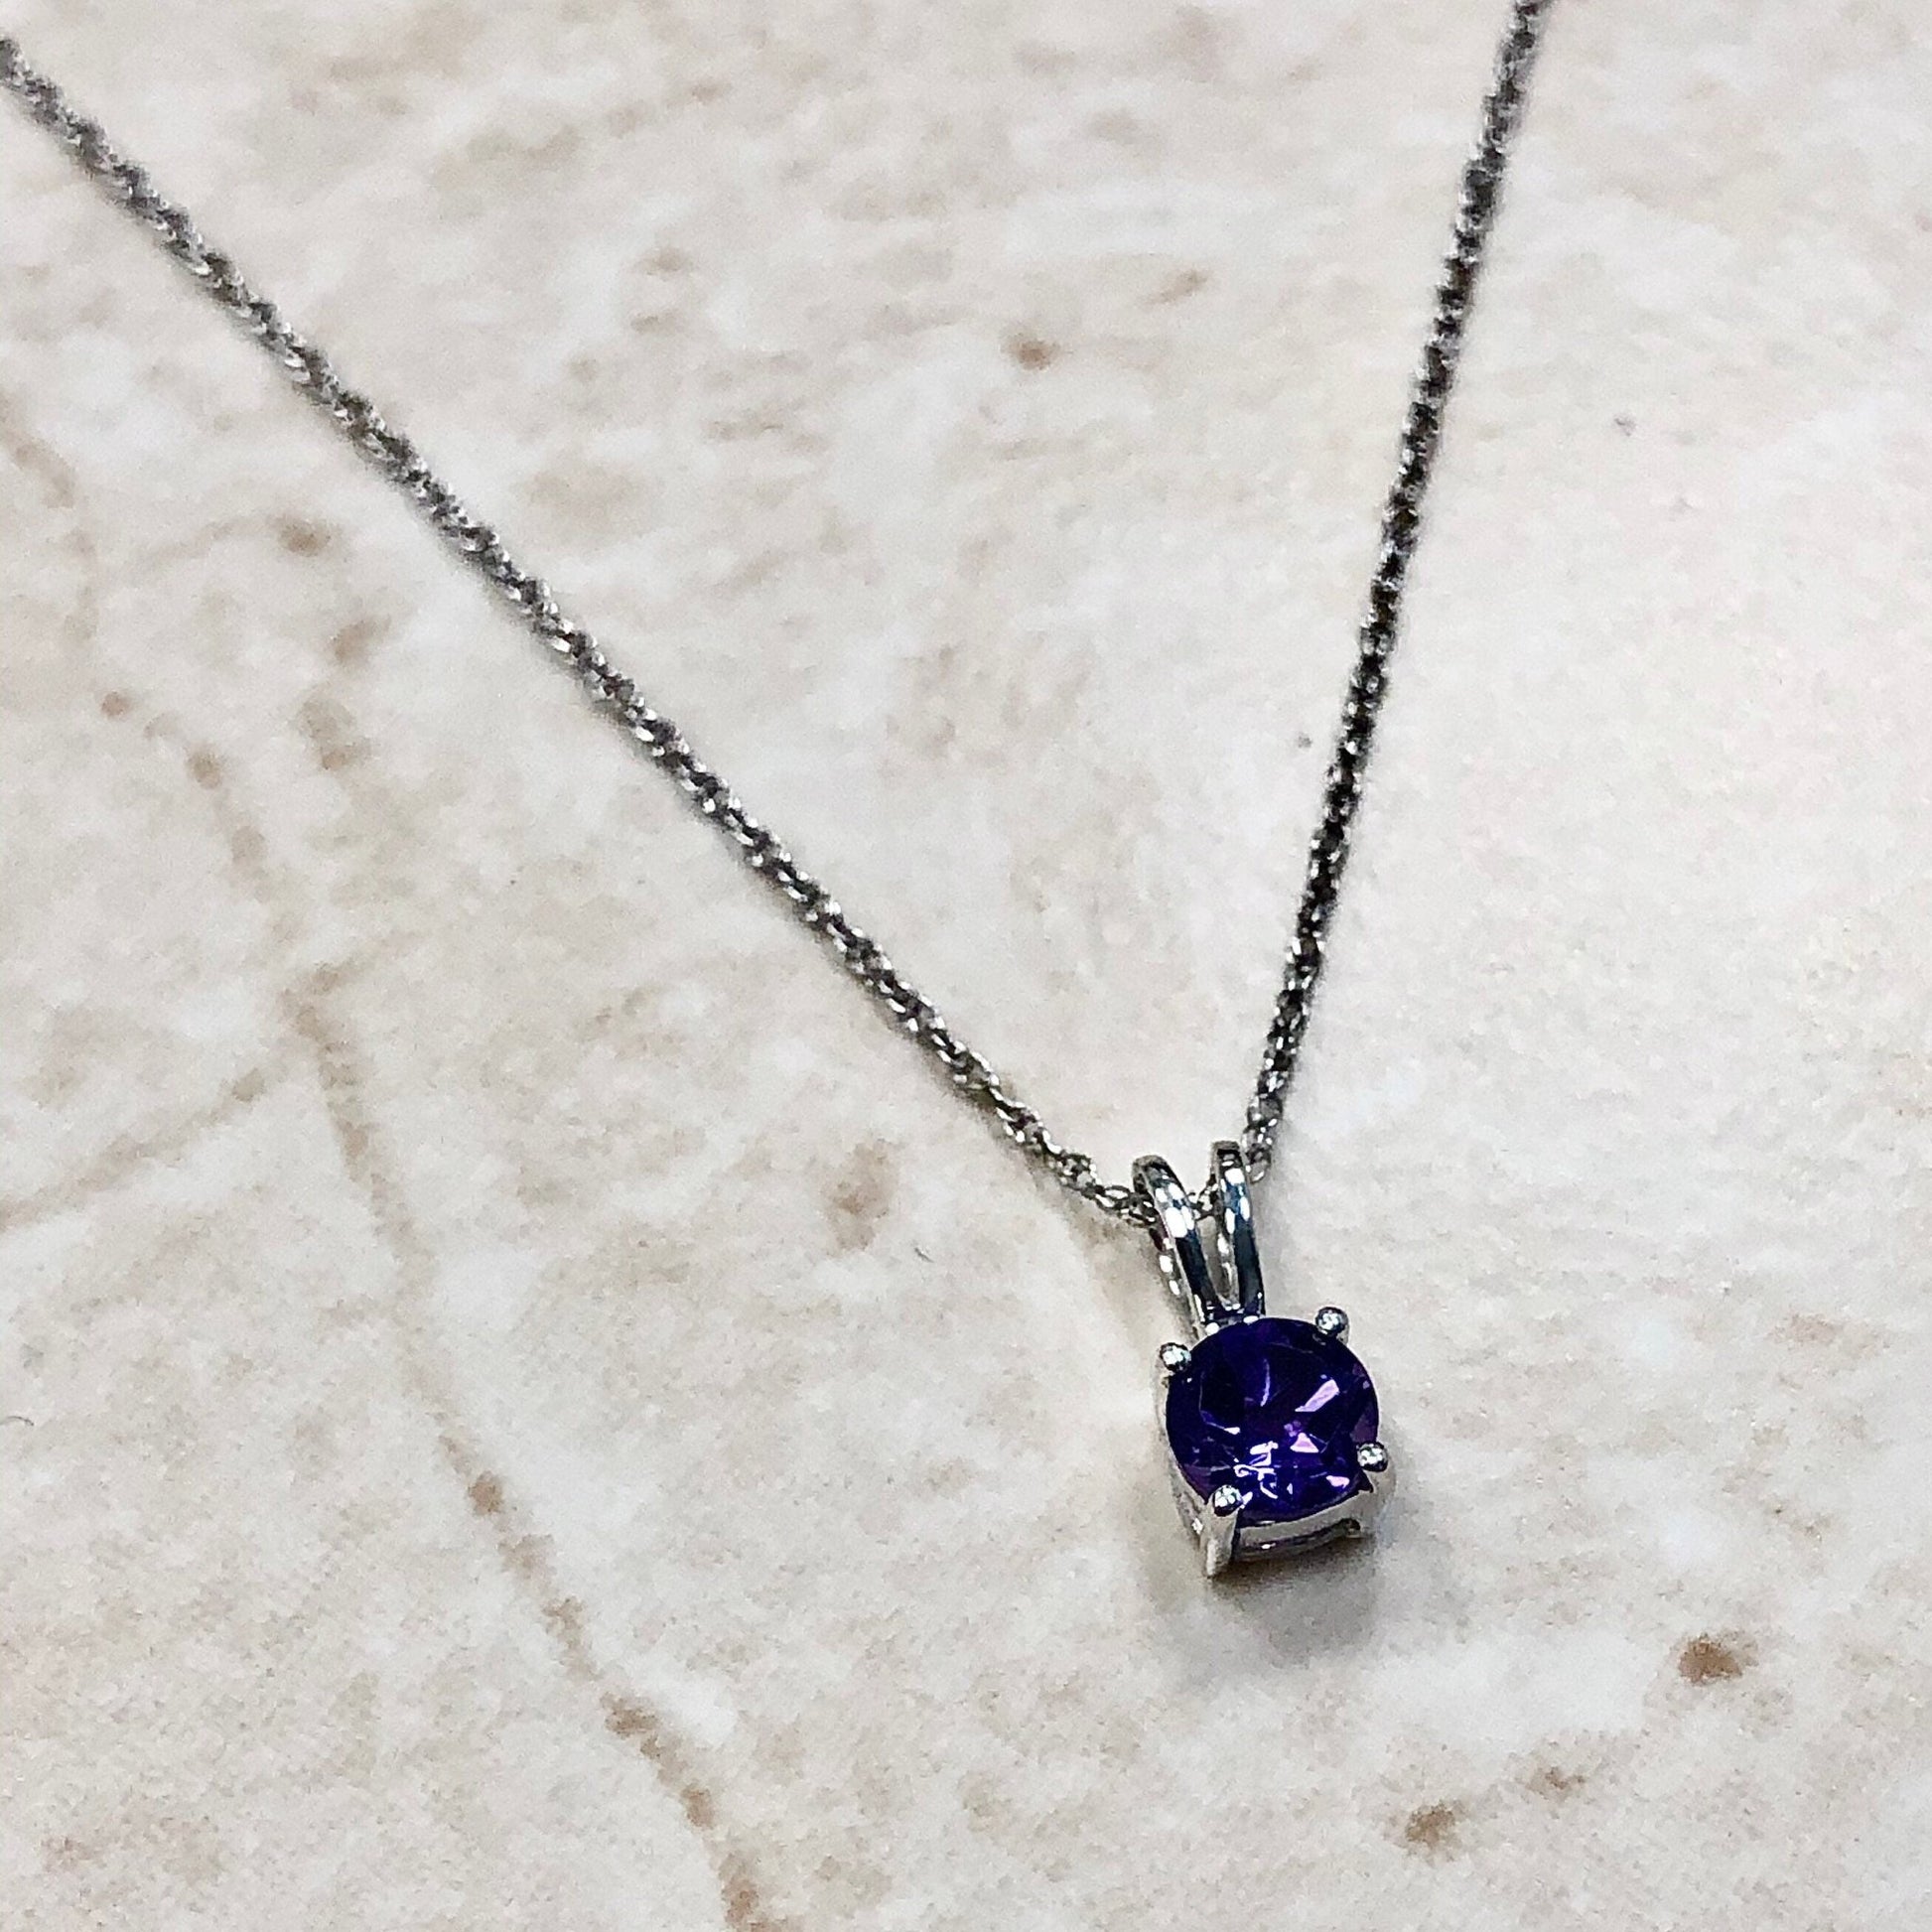 Round Amethyst Pendant Necklace - 14 Karat White Gold - February Birthstone - Genuine Gemstone - 18” Chain - Birthday Gift